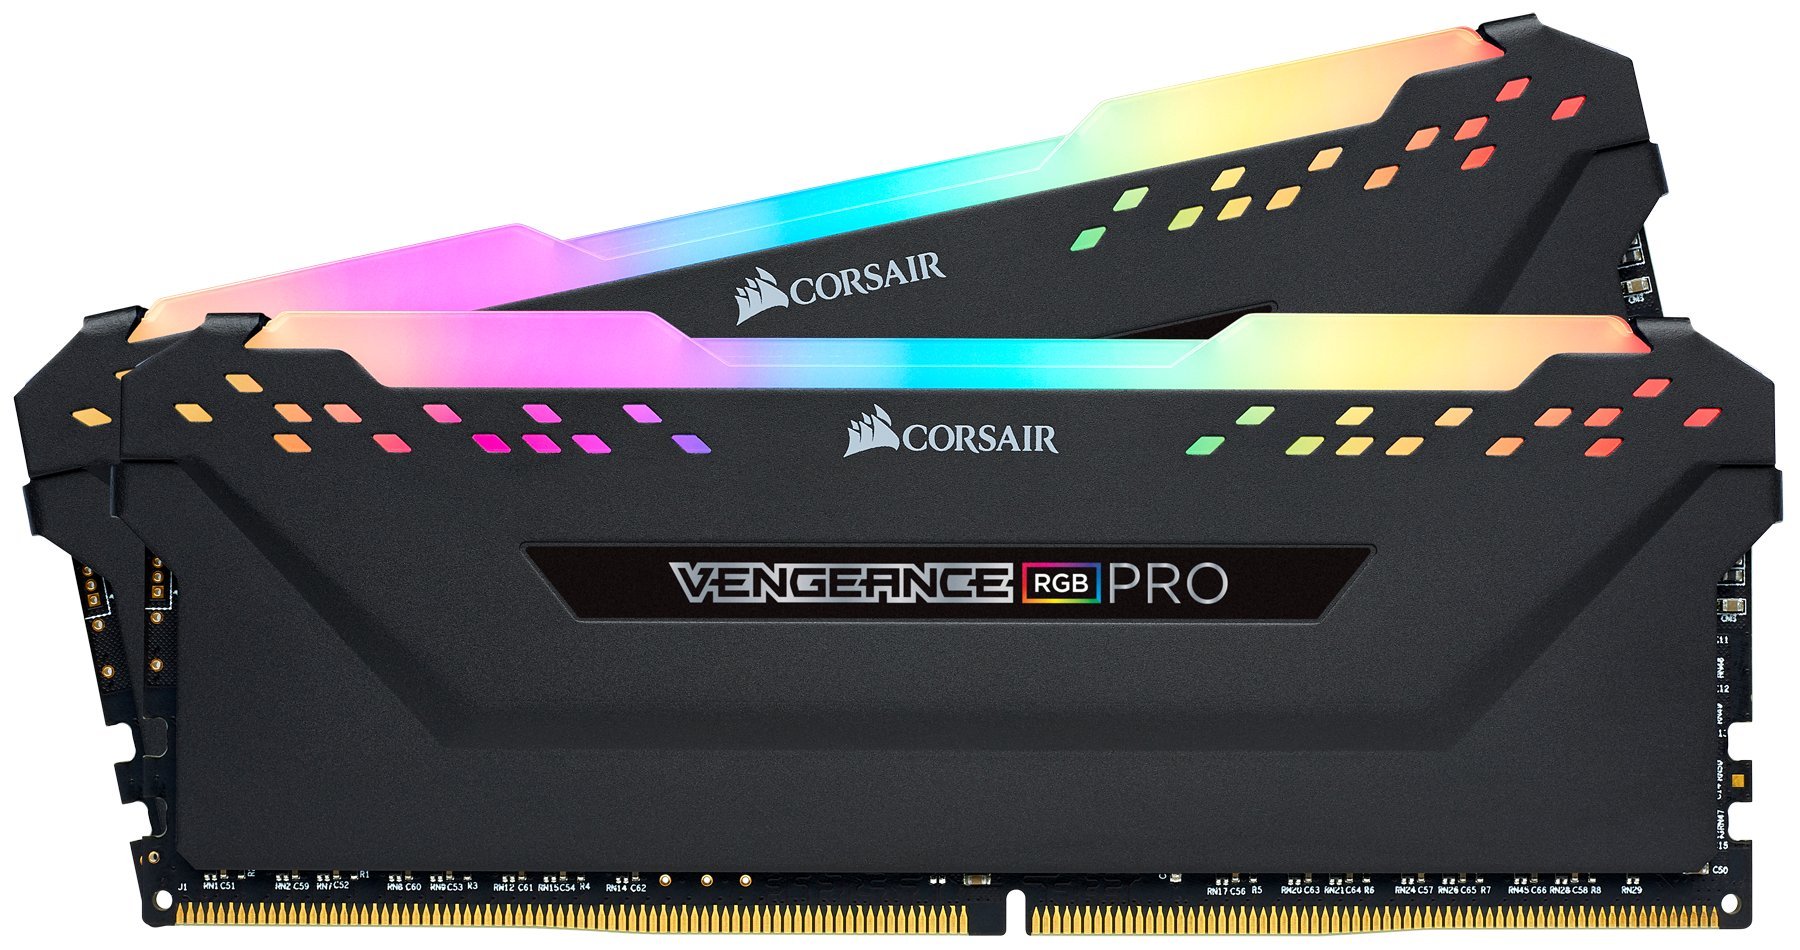 Corsair Vengeance RGB PRO 16GB (2x8GB) DDR4 2666MHz C16 XMP 2.0 Enthusiast RGB LED-Beleuchtung Speicherkit - schwarz